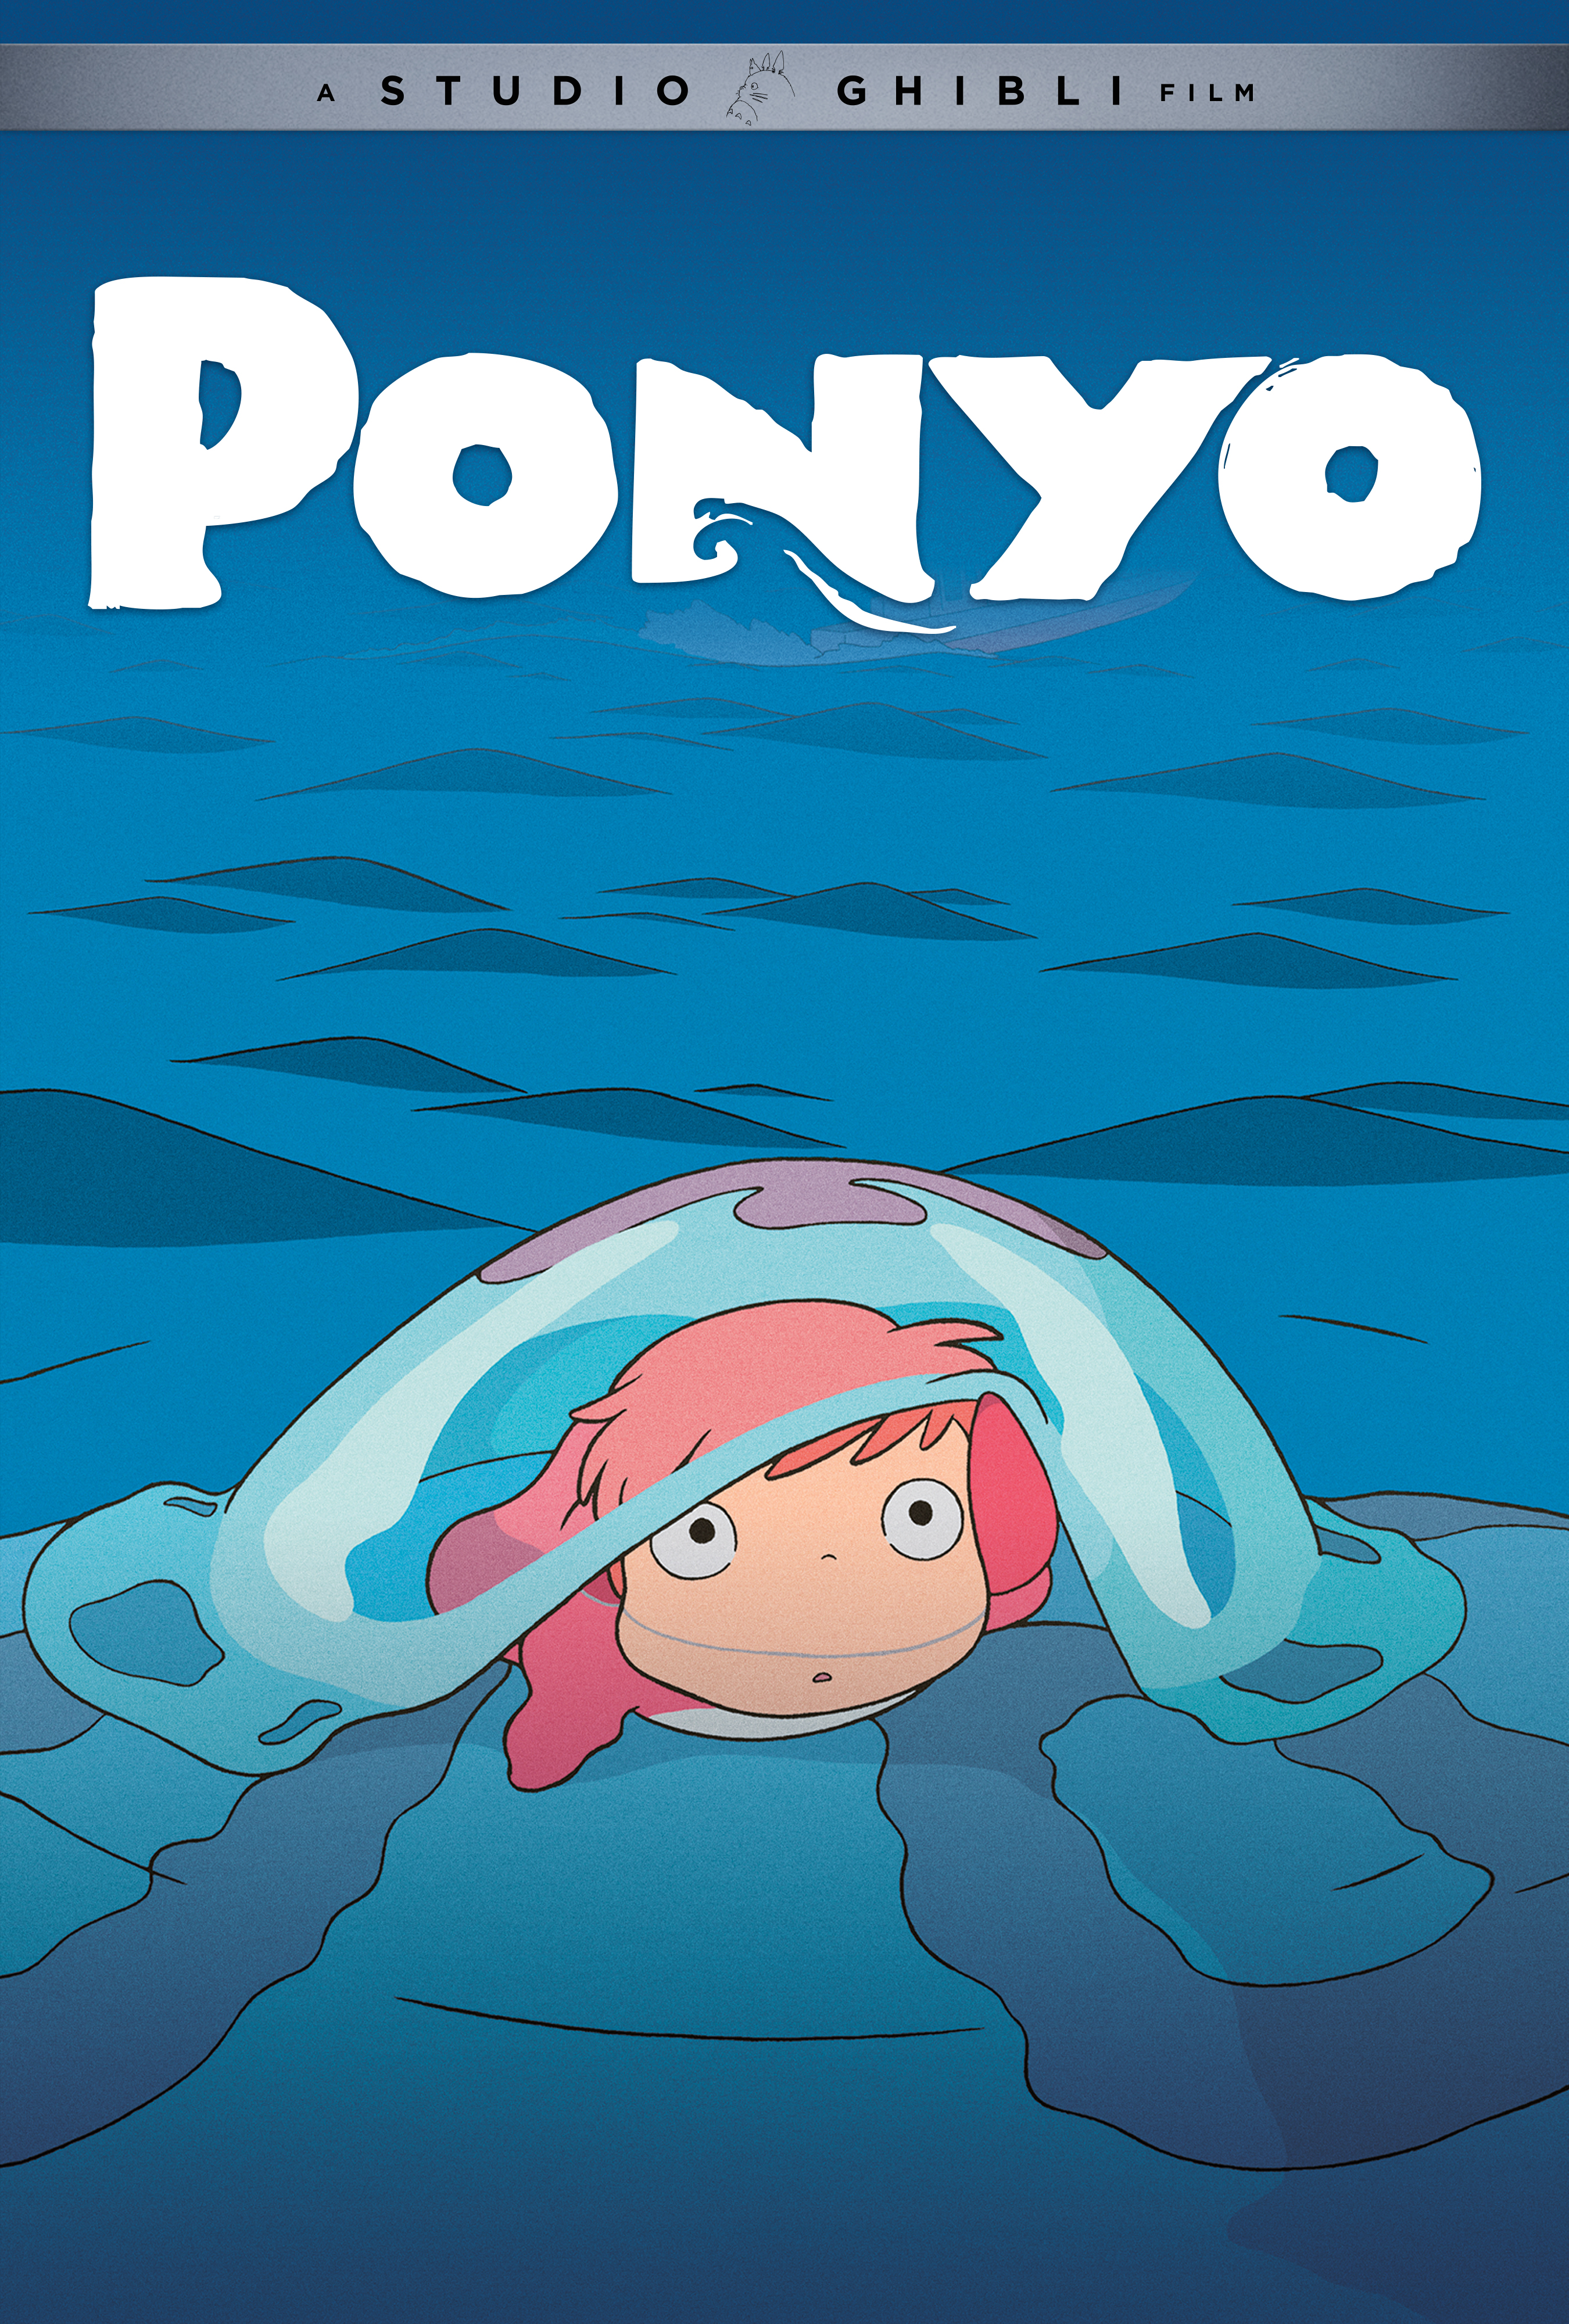 Ponyo Movie Poster